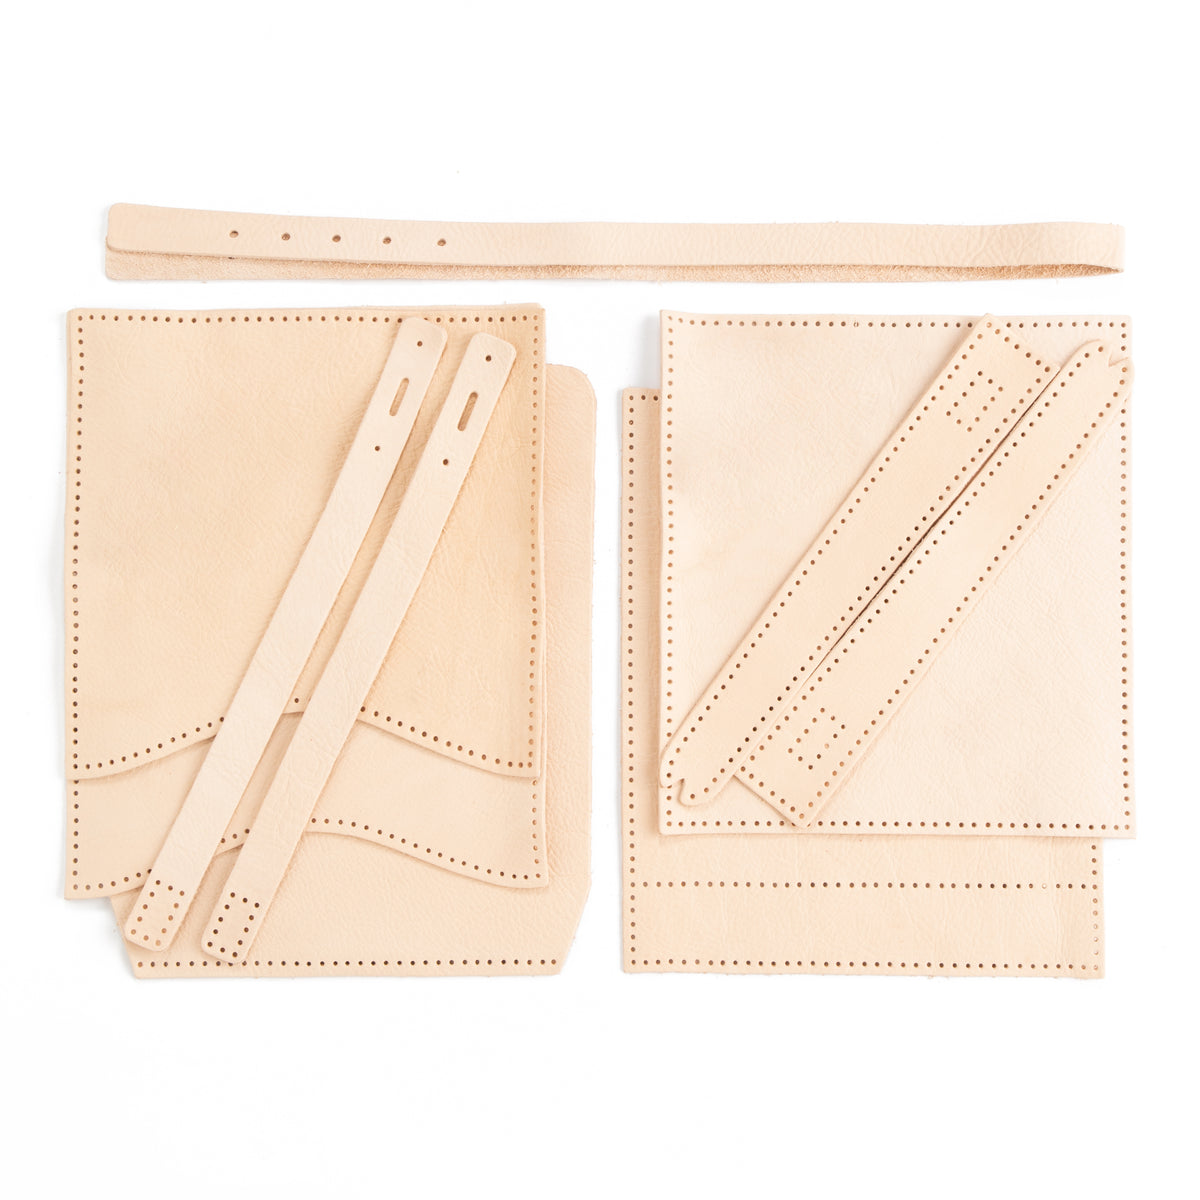 Tandy Leather Vertical Messenger Bag Kit Do it yours Beginner level